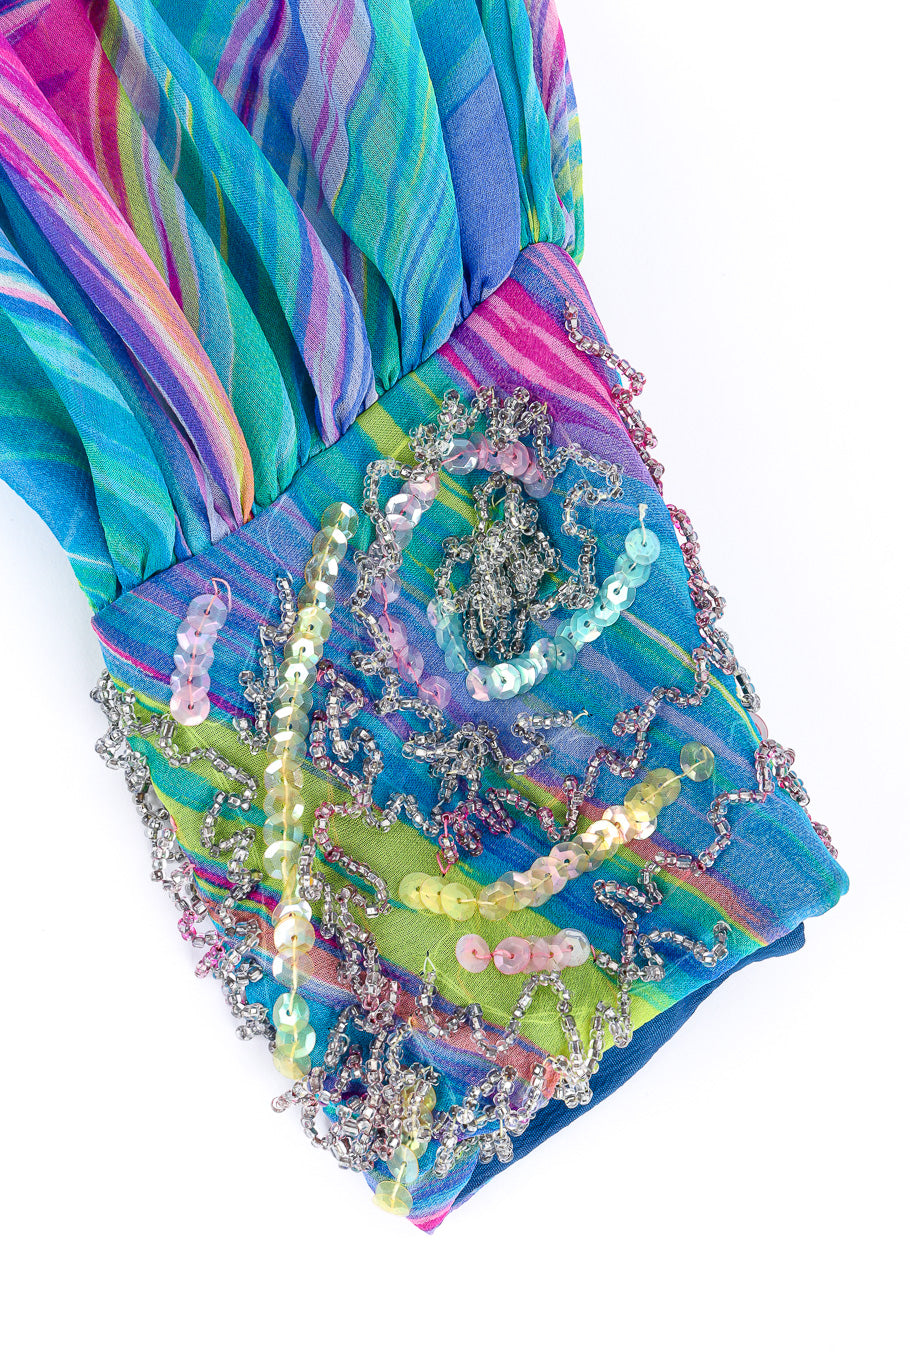 Vintage Mr. Frank Abstract Swirl Silk Dress embroidery on cuff closeup @Recessla